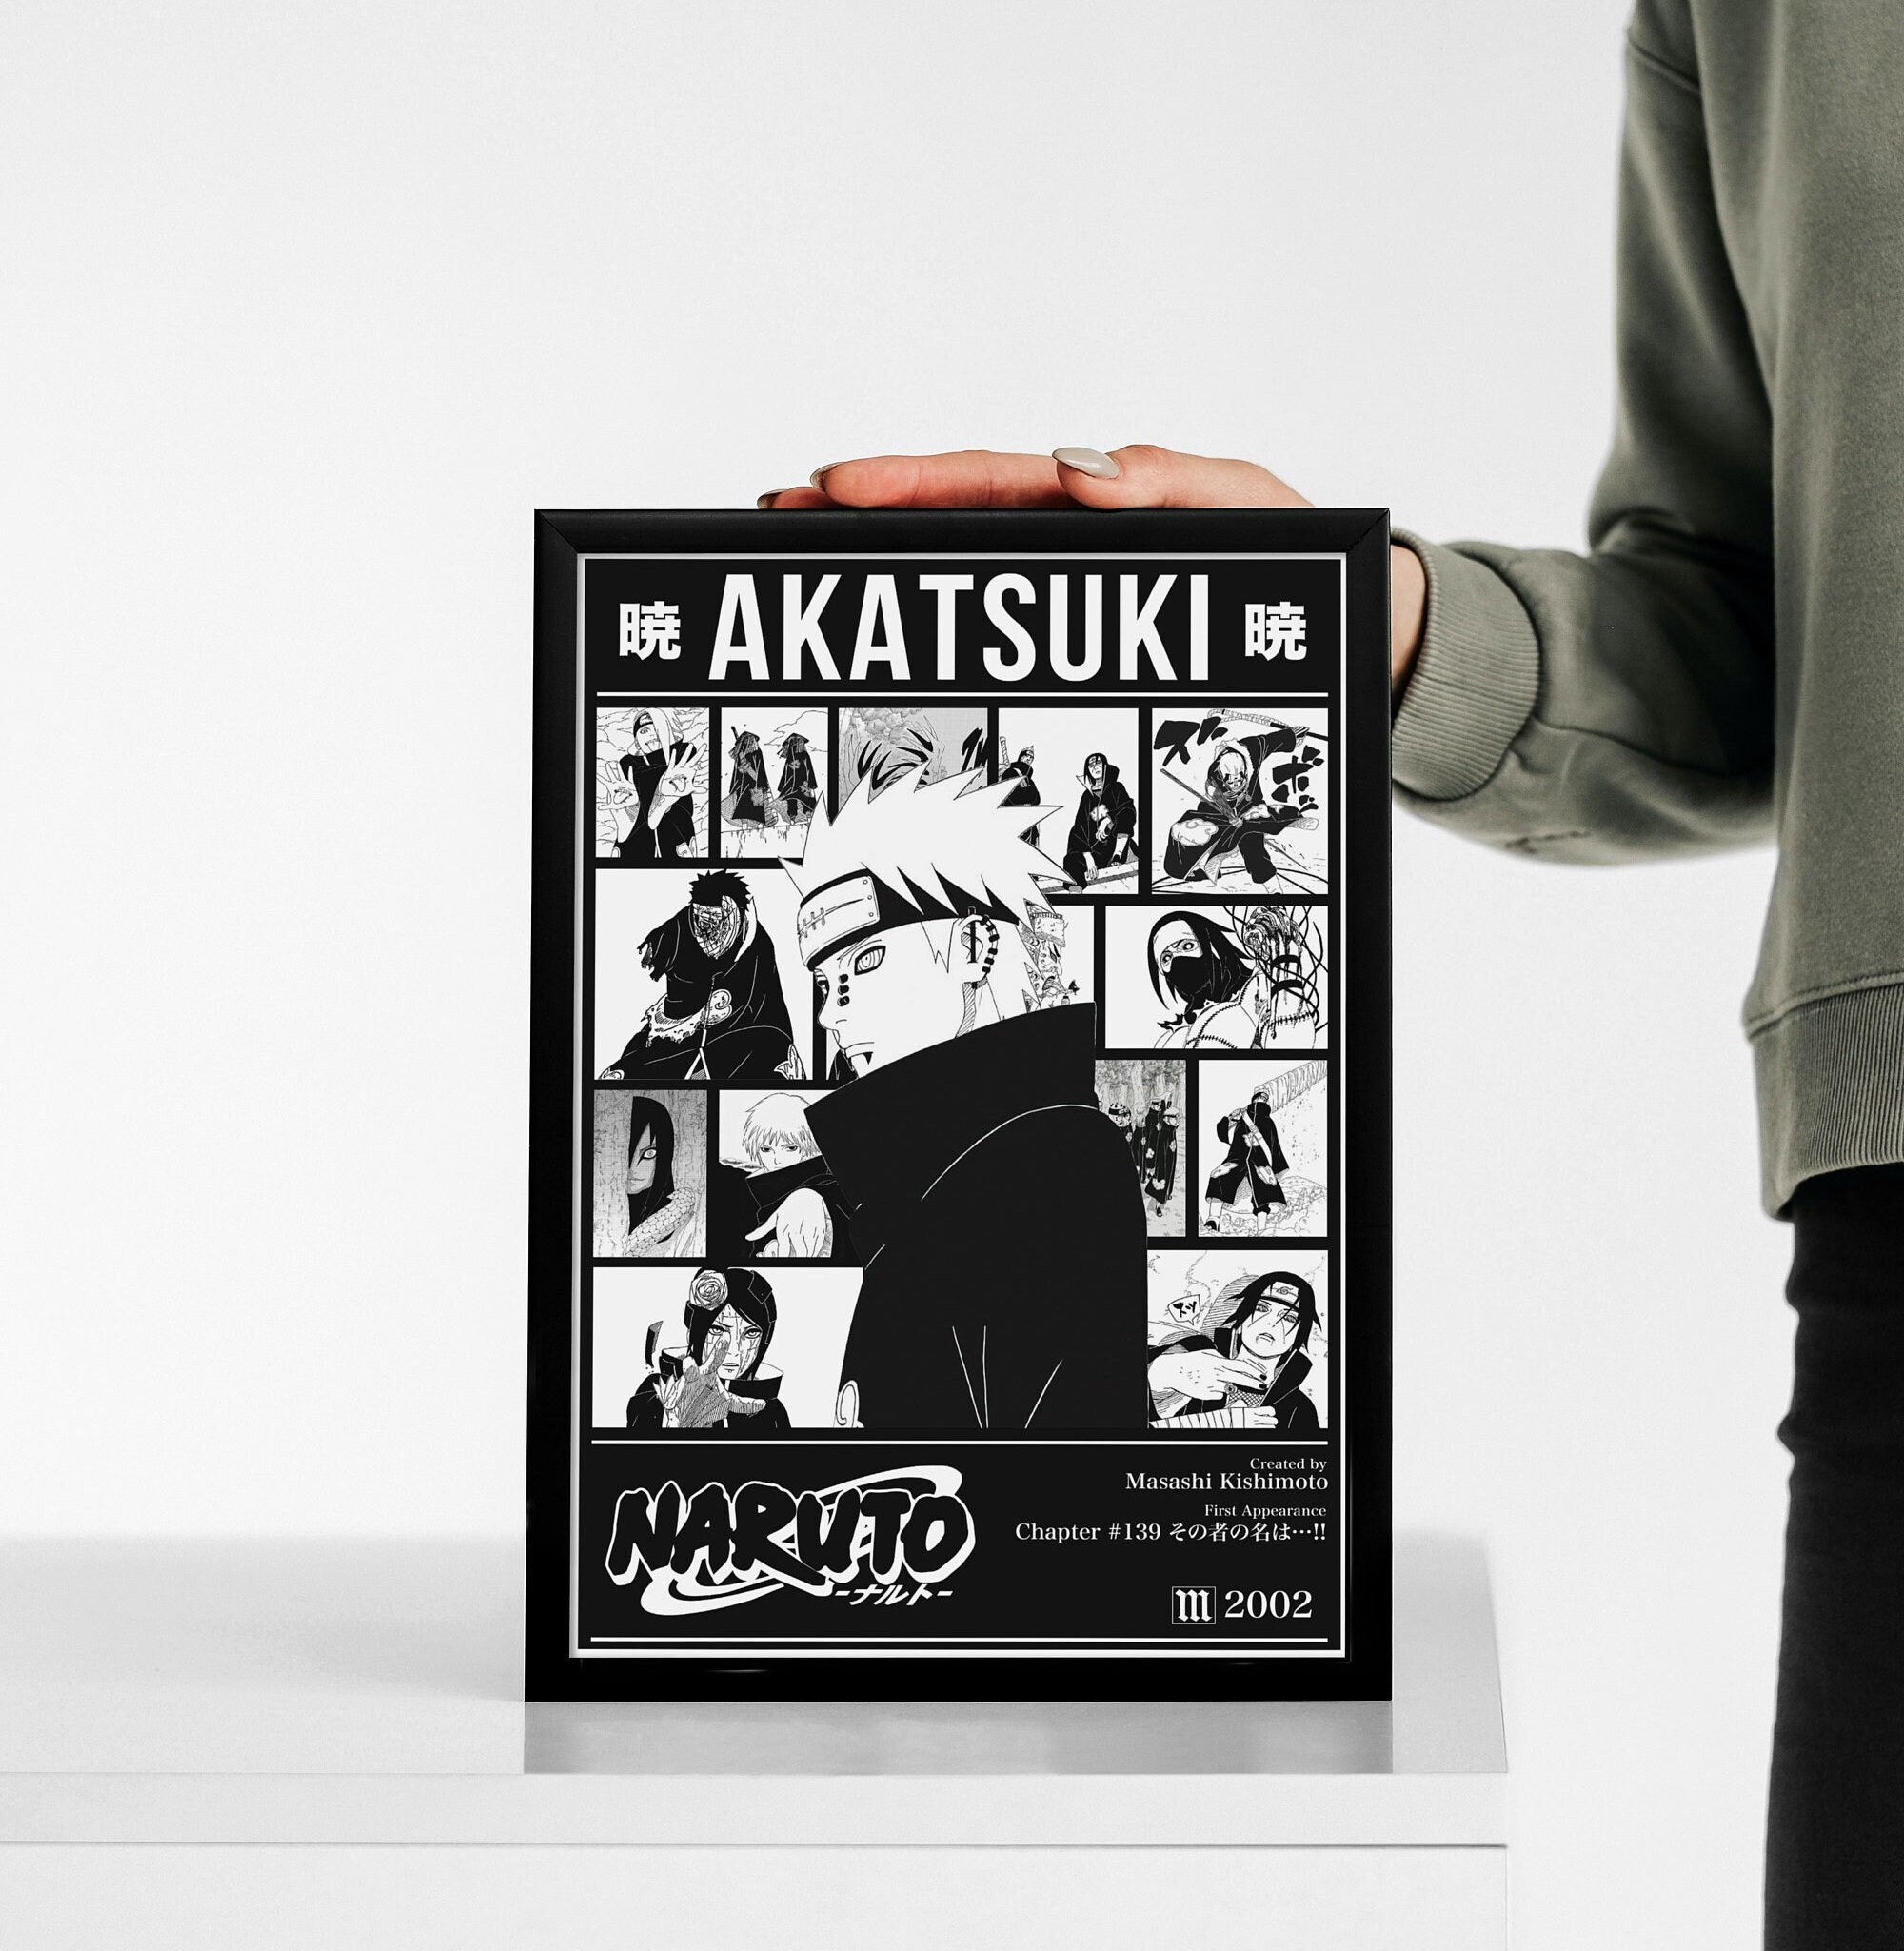 65167 Anime Akatsuki Desktop Background 36x24 WALL PRINT POSTER